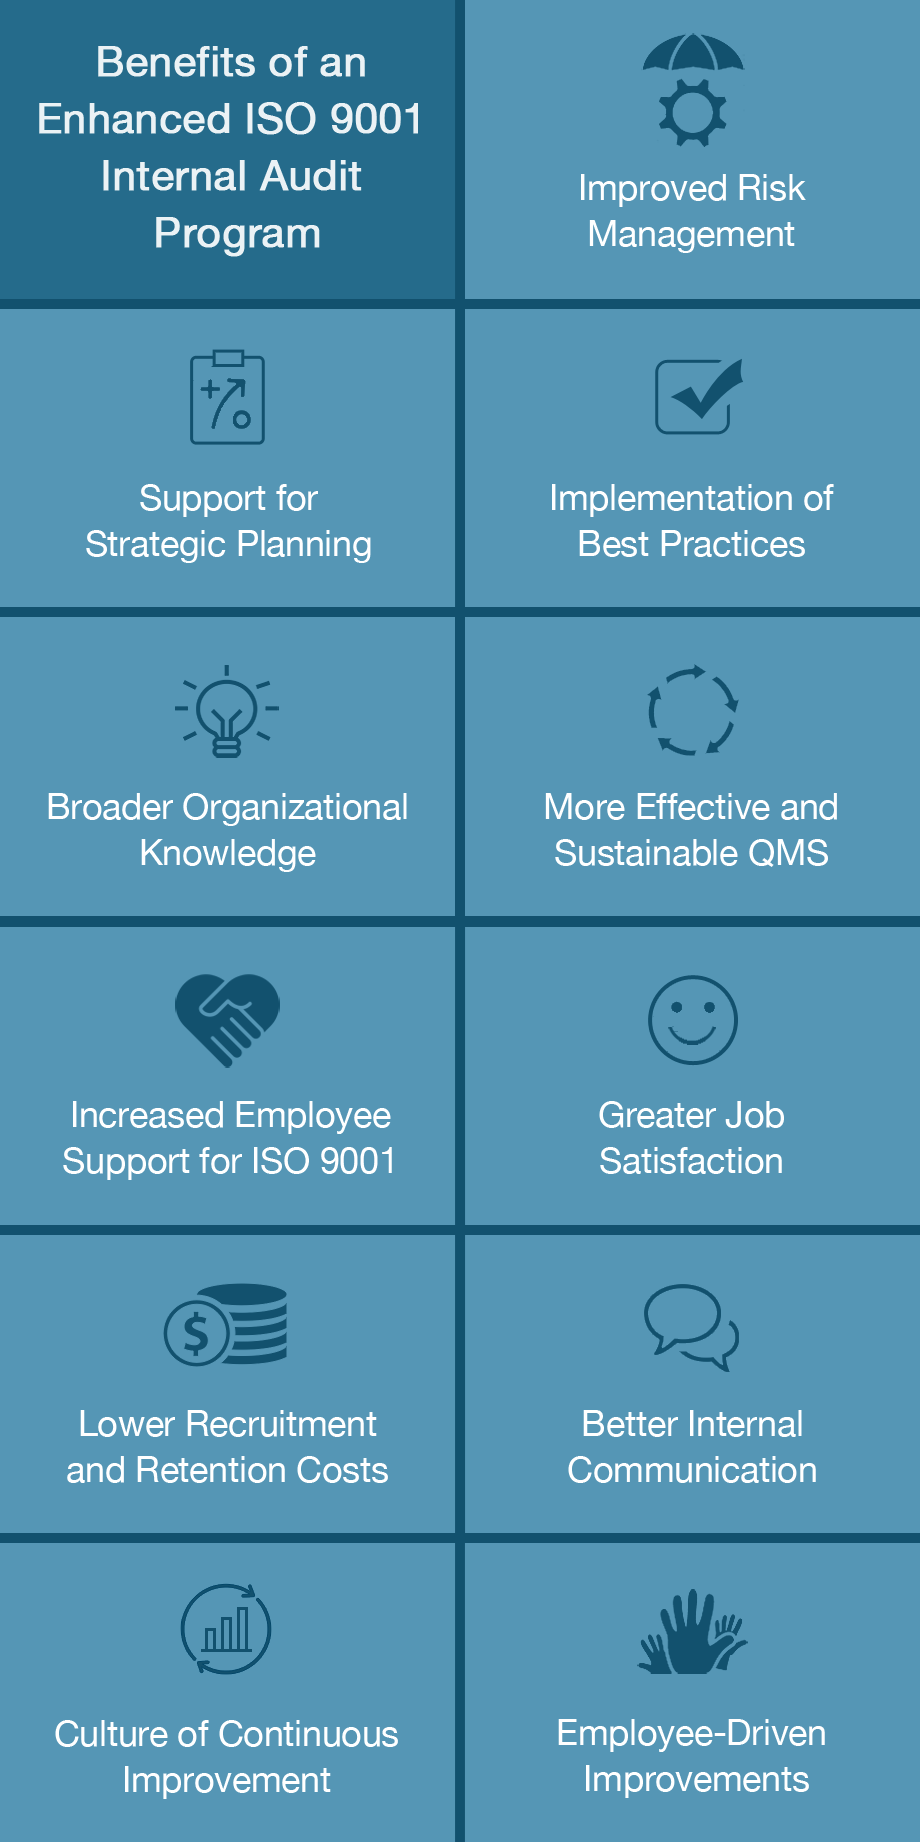 Benefits of an Enhanced ISO 9001 Internal Audit Program